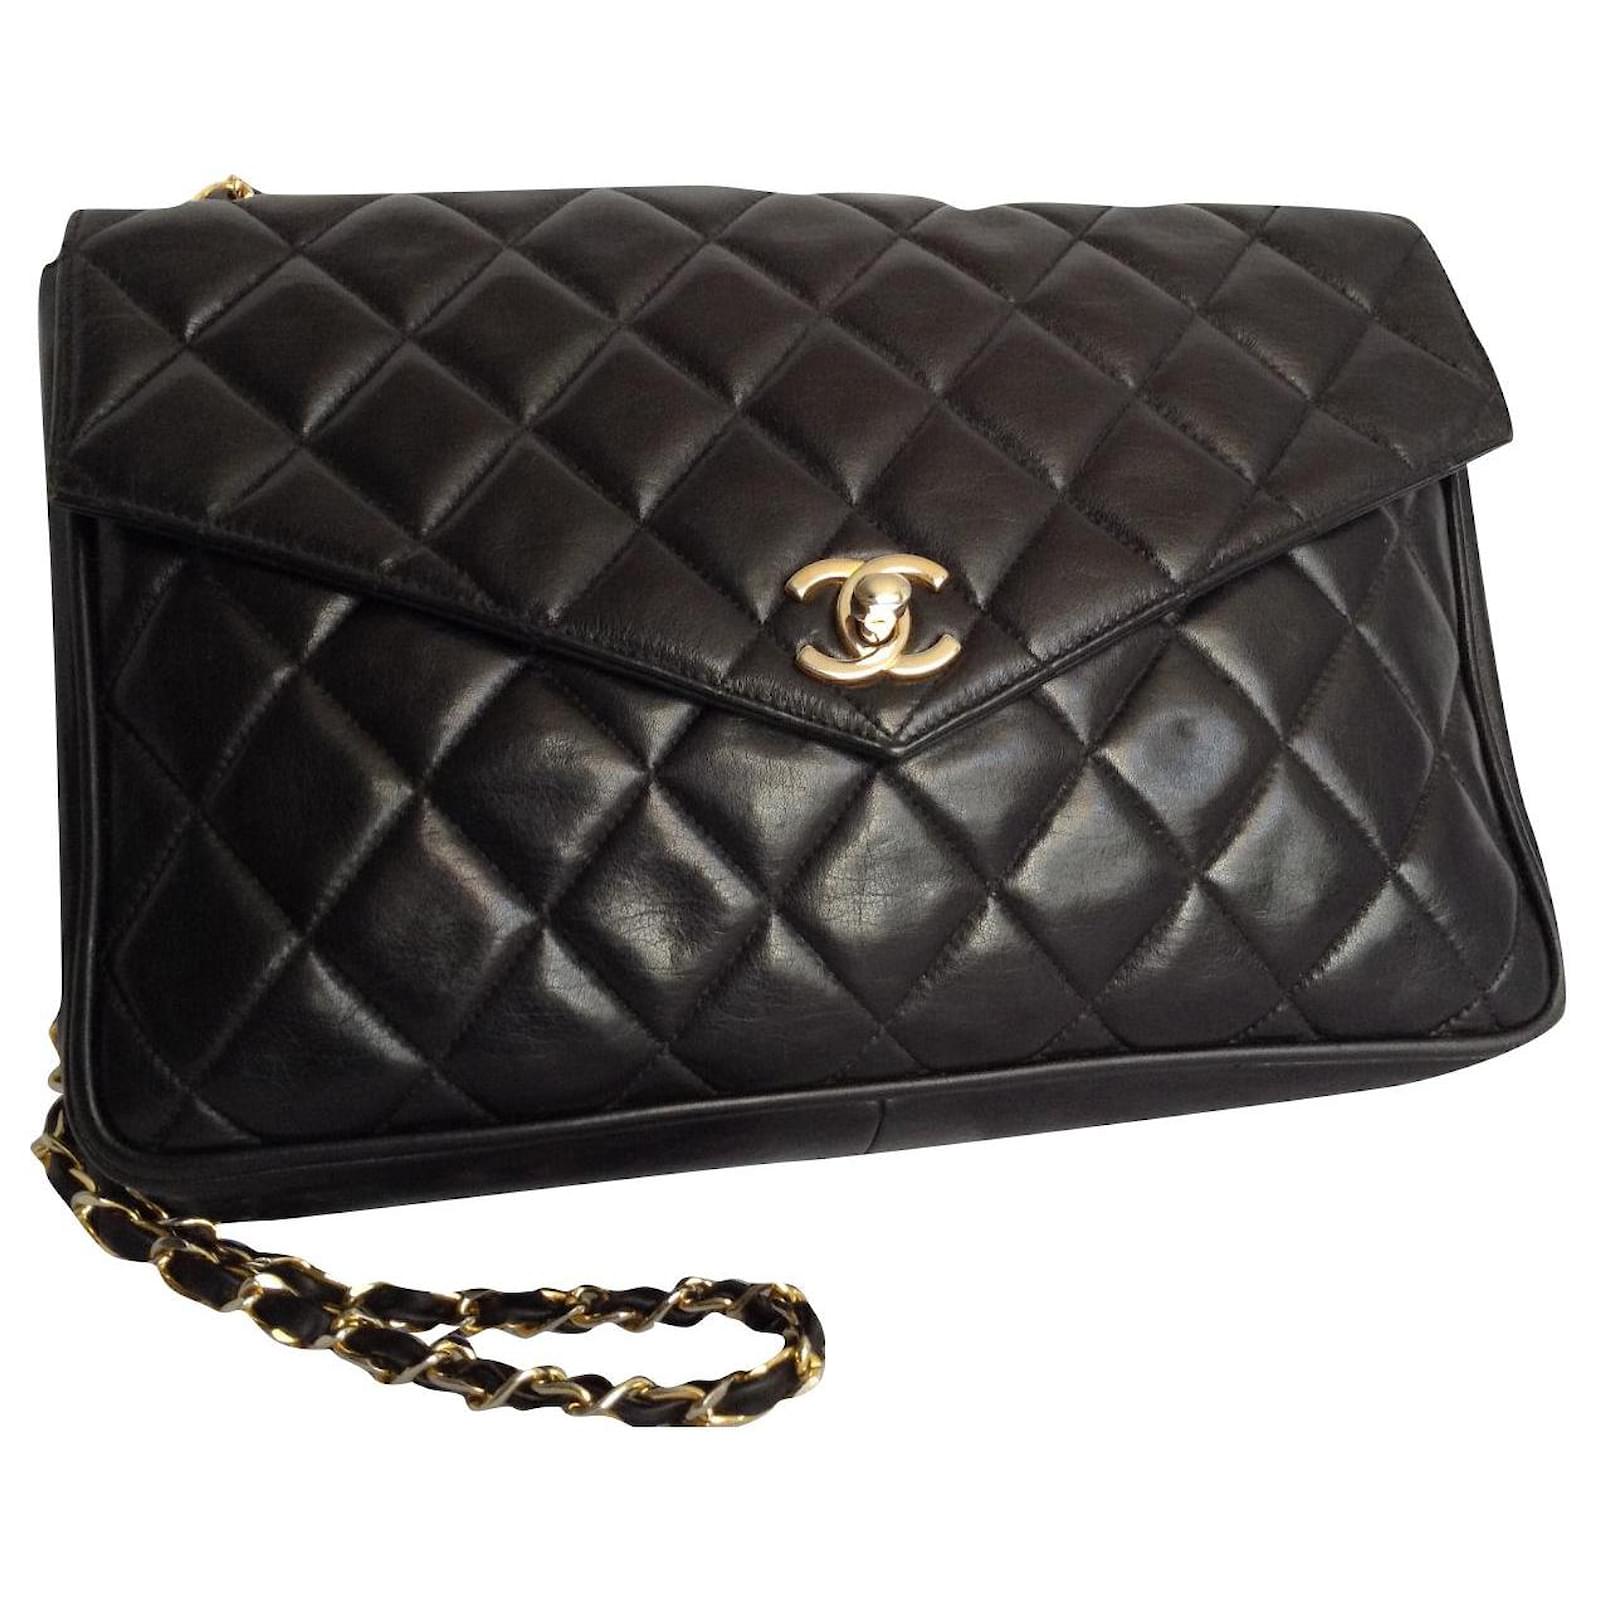 Chanel Vintage Chanel Black Quilted Leather Envelope Flap